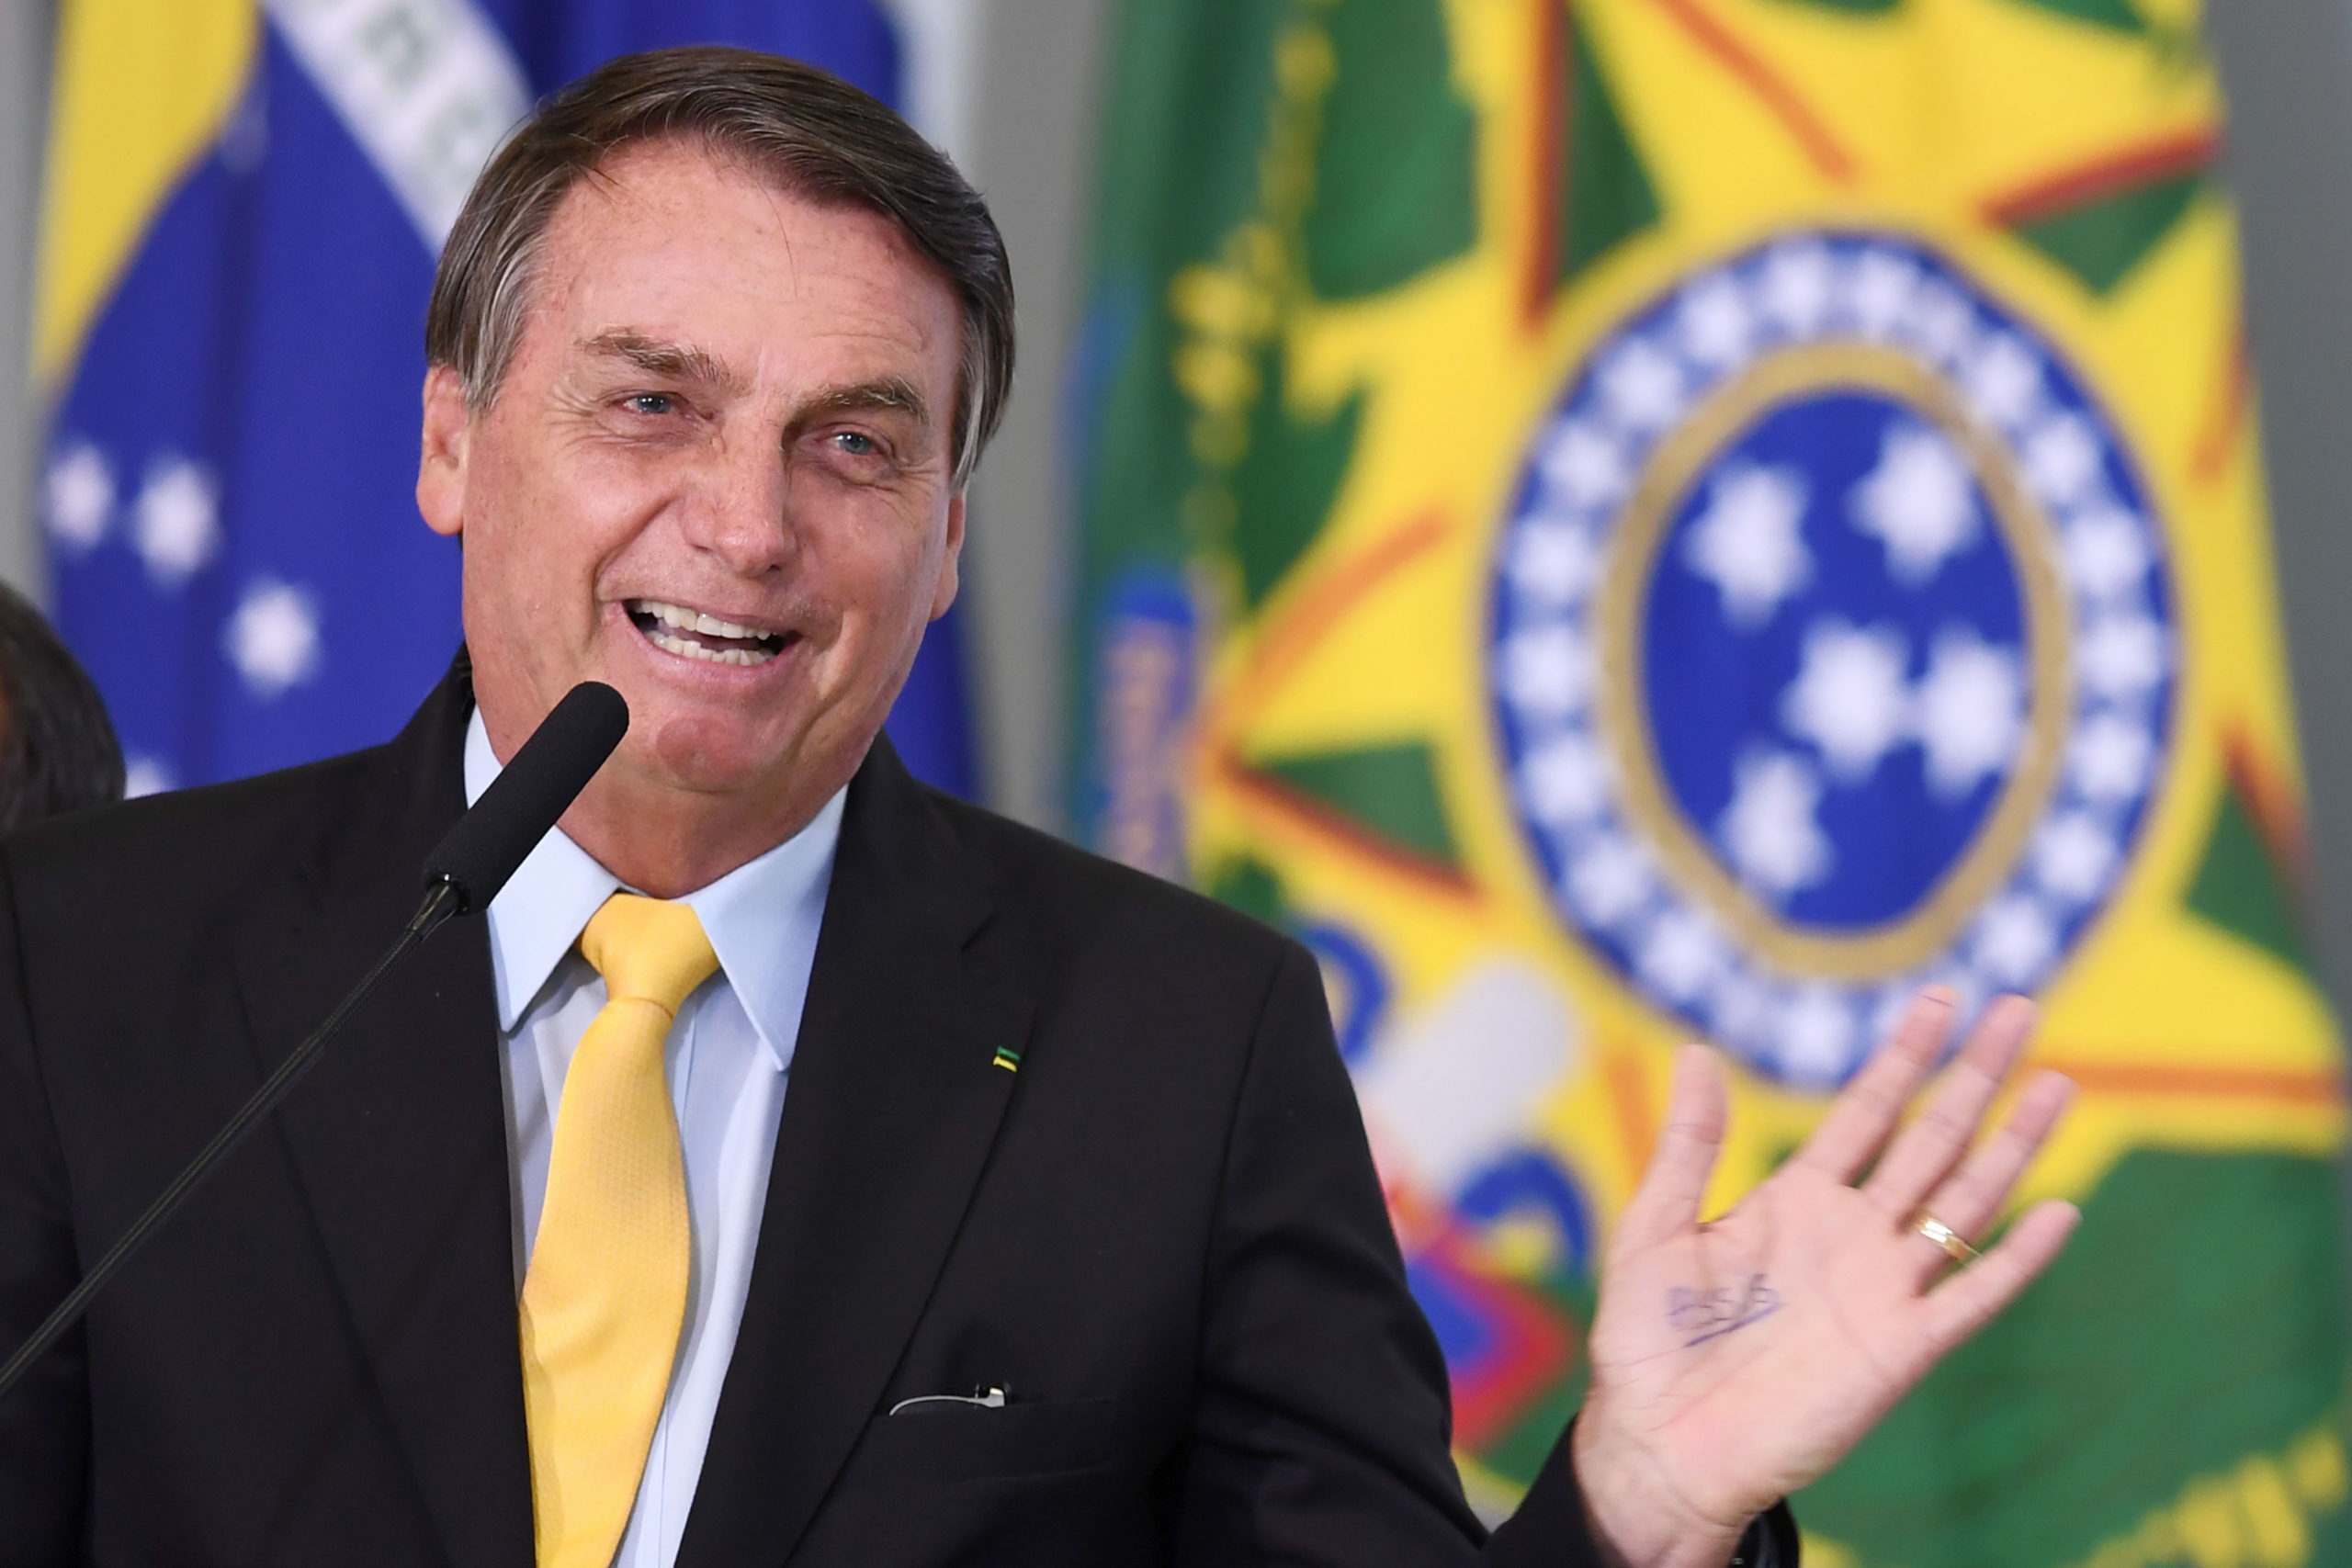 After presidency, unclear fate for Brazil's brash Bolsonaro